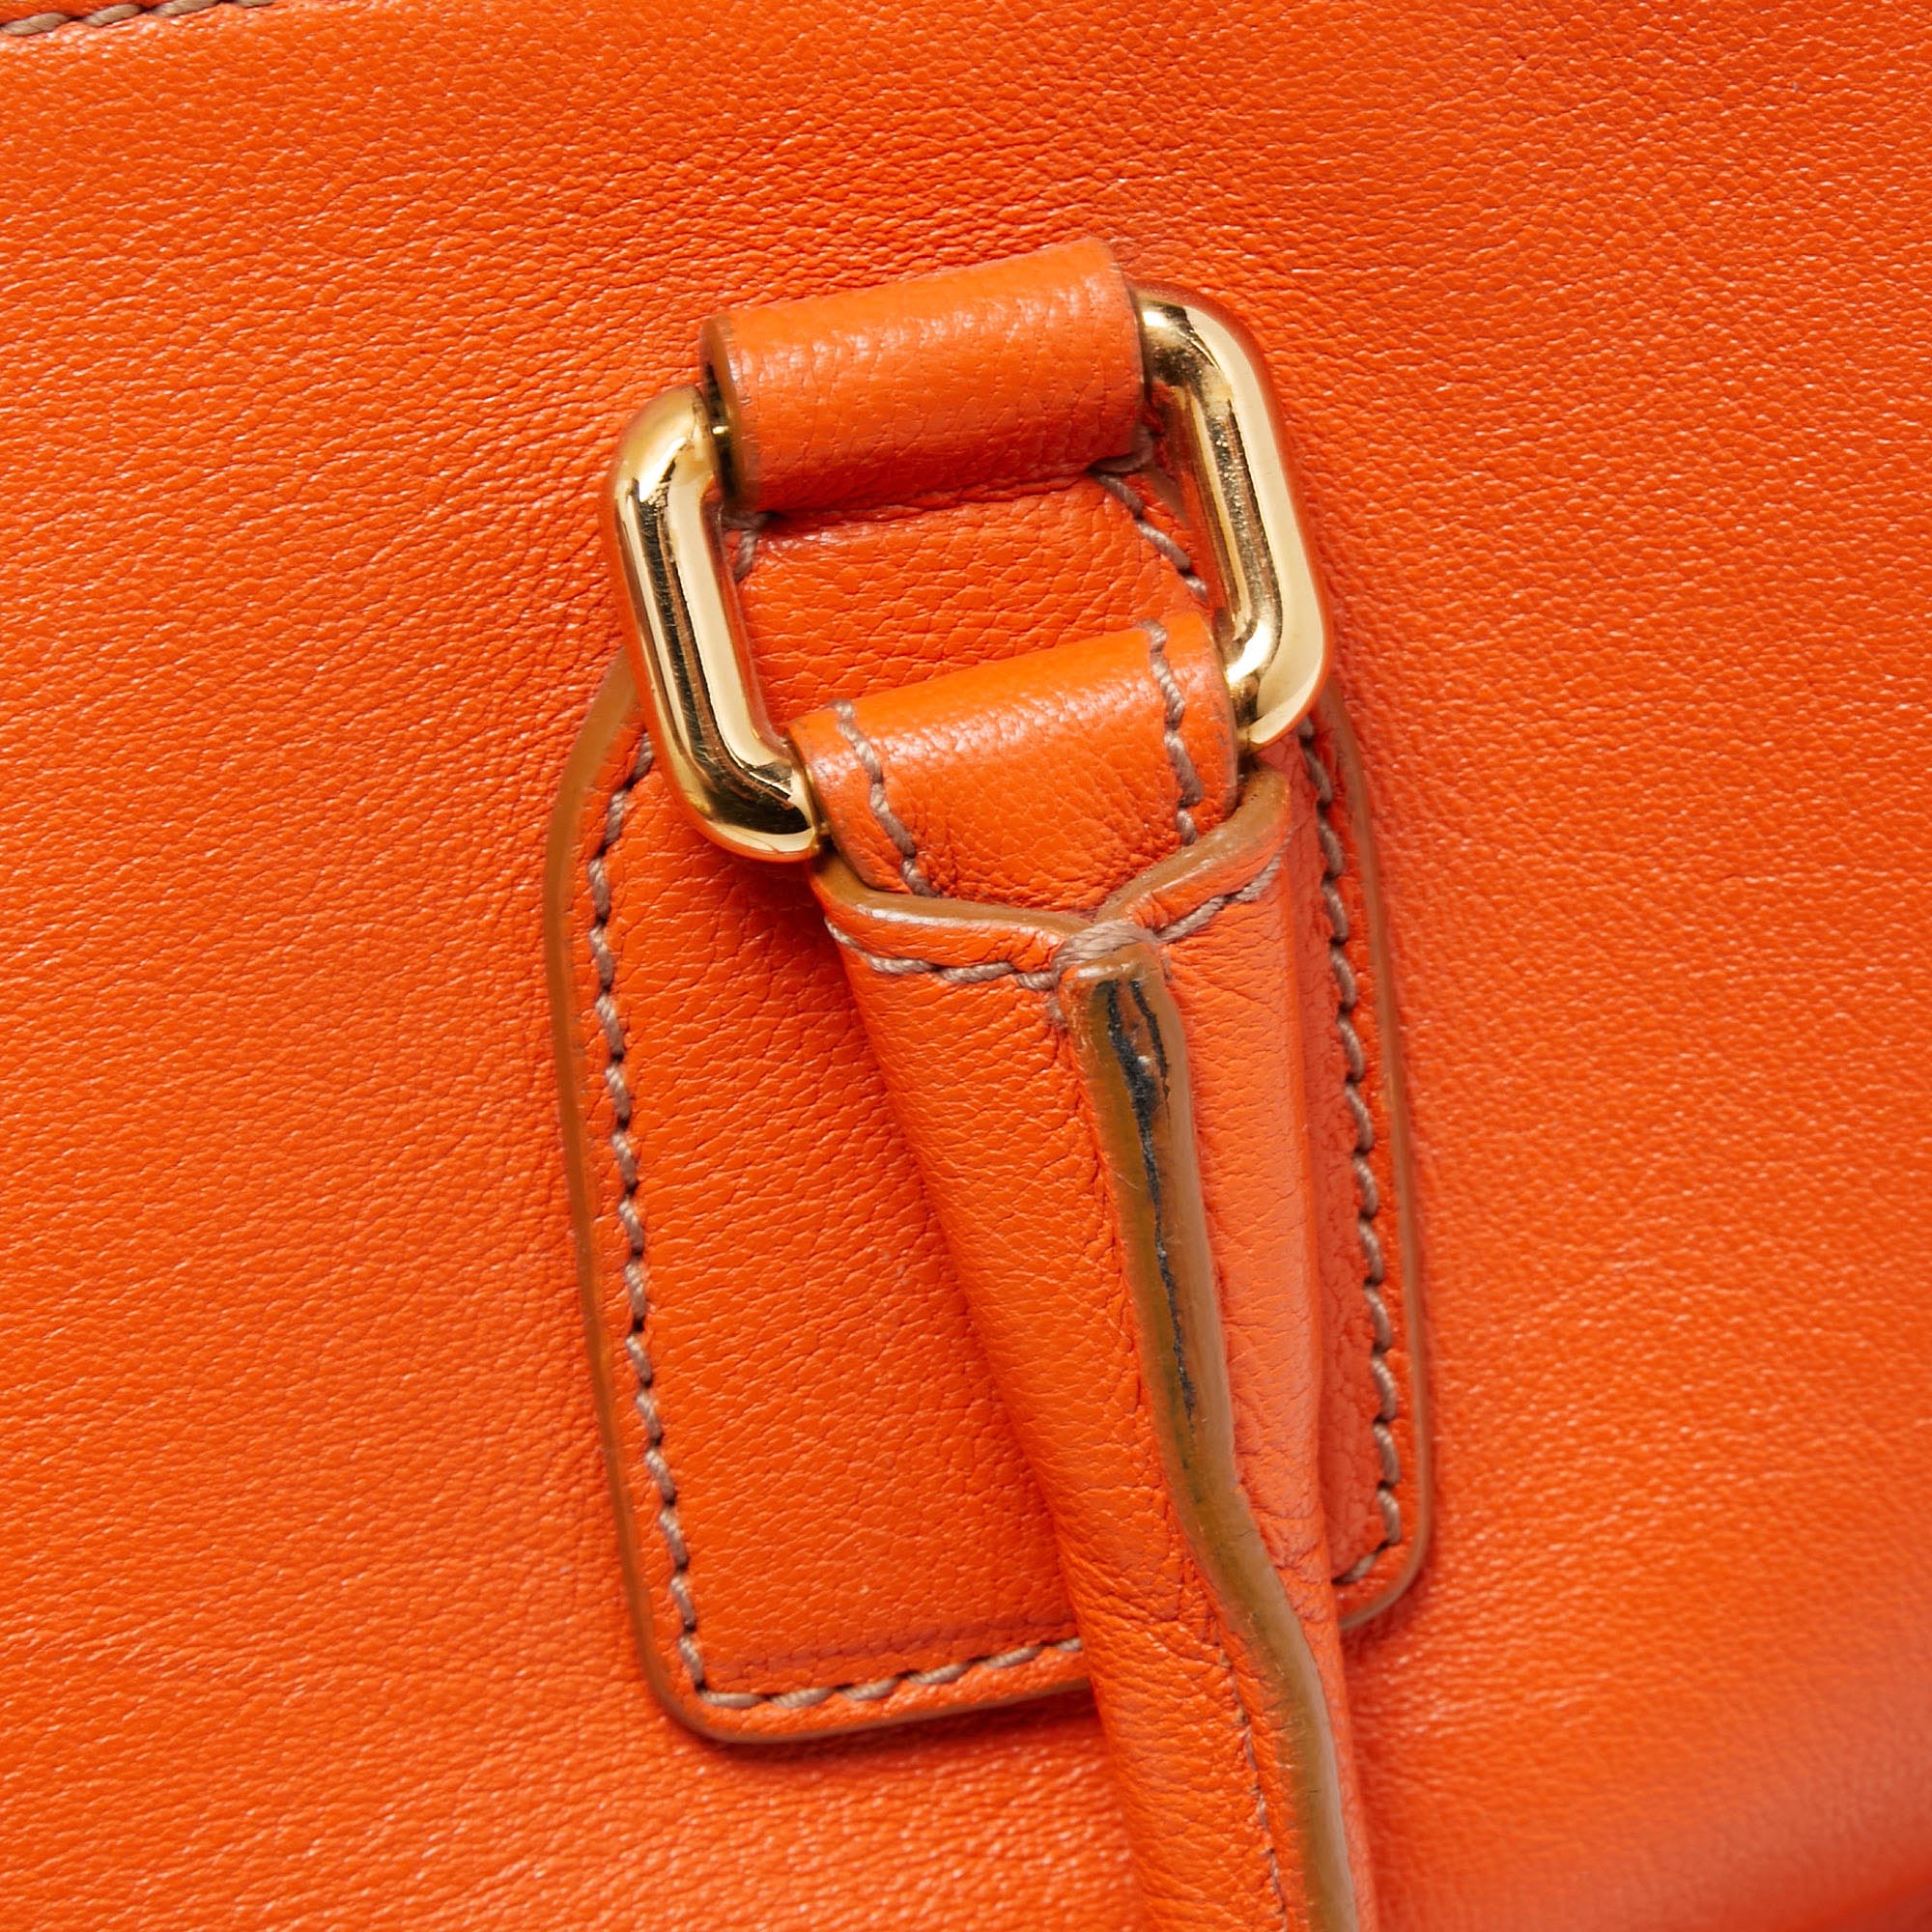 Dolce & Gabbana Orange Leather Twist Laptop Bag